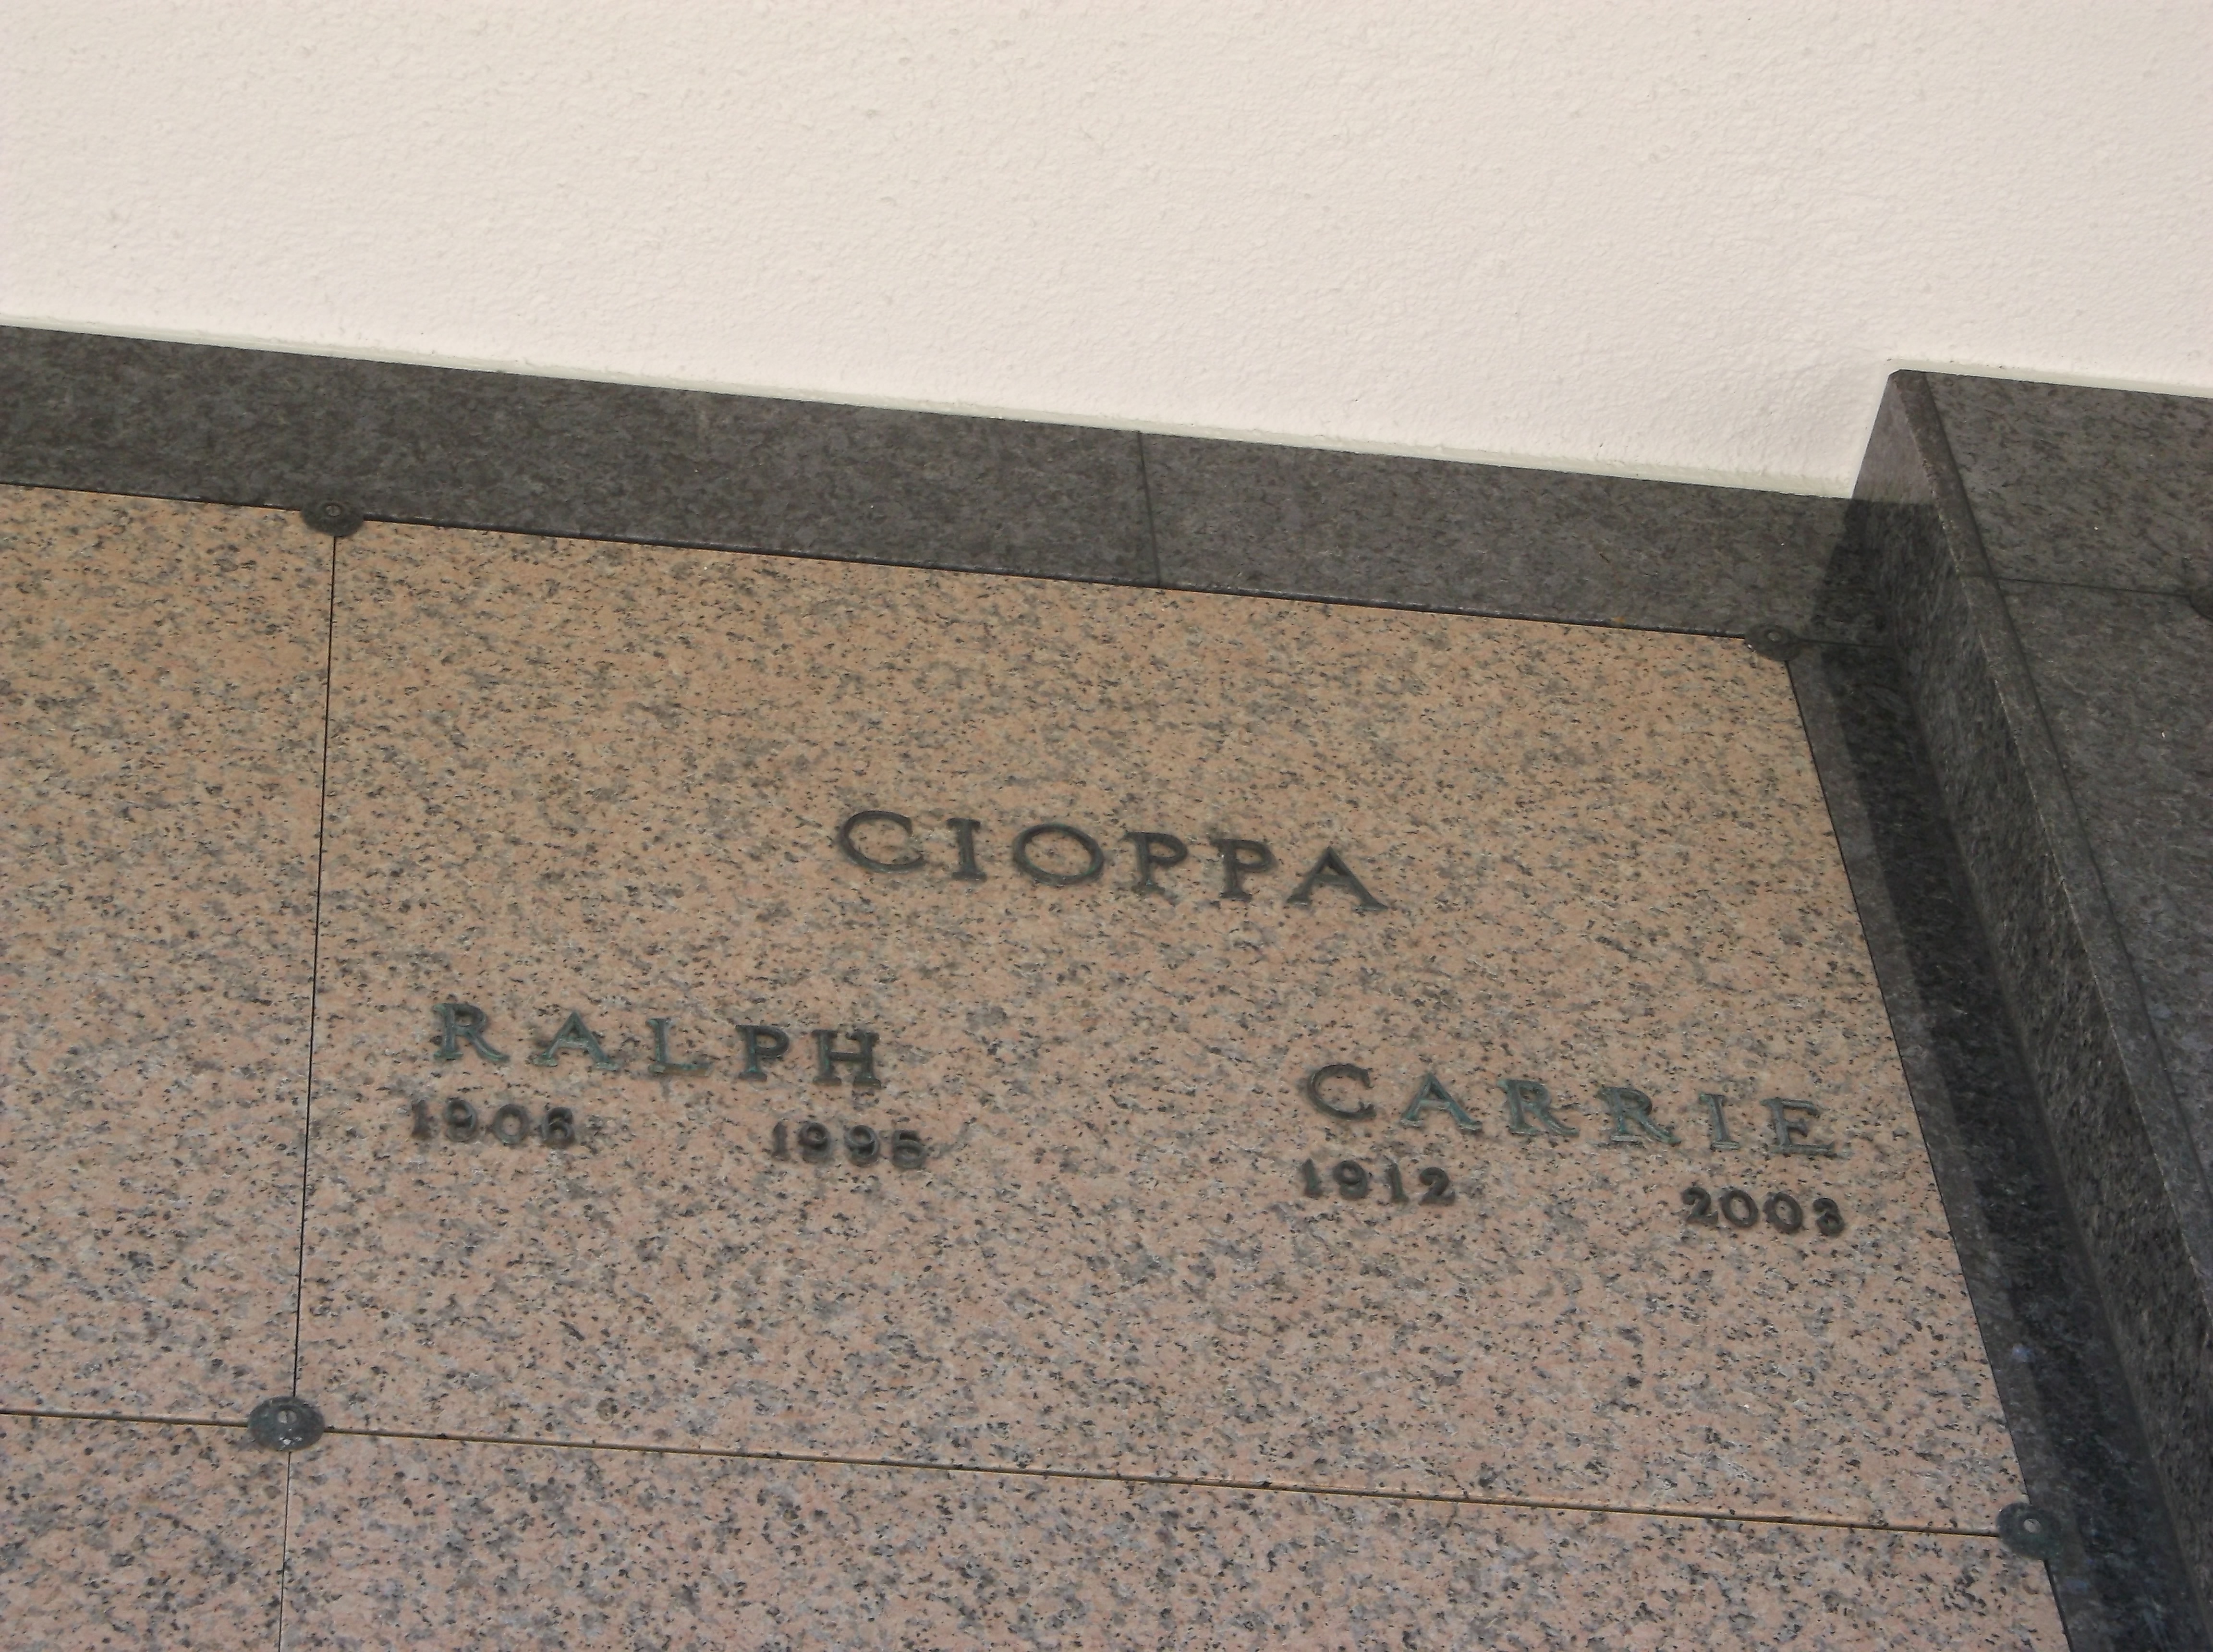 Carrie Cioppa